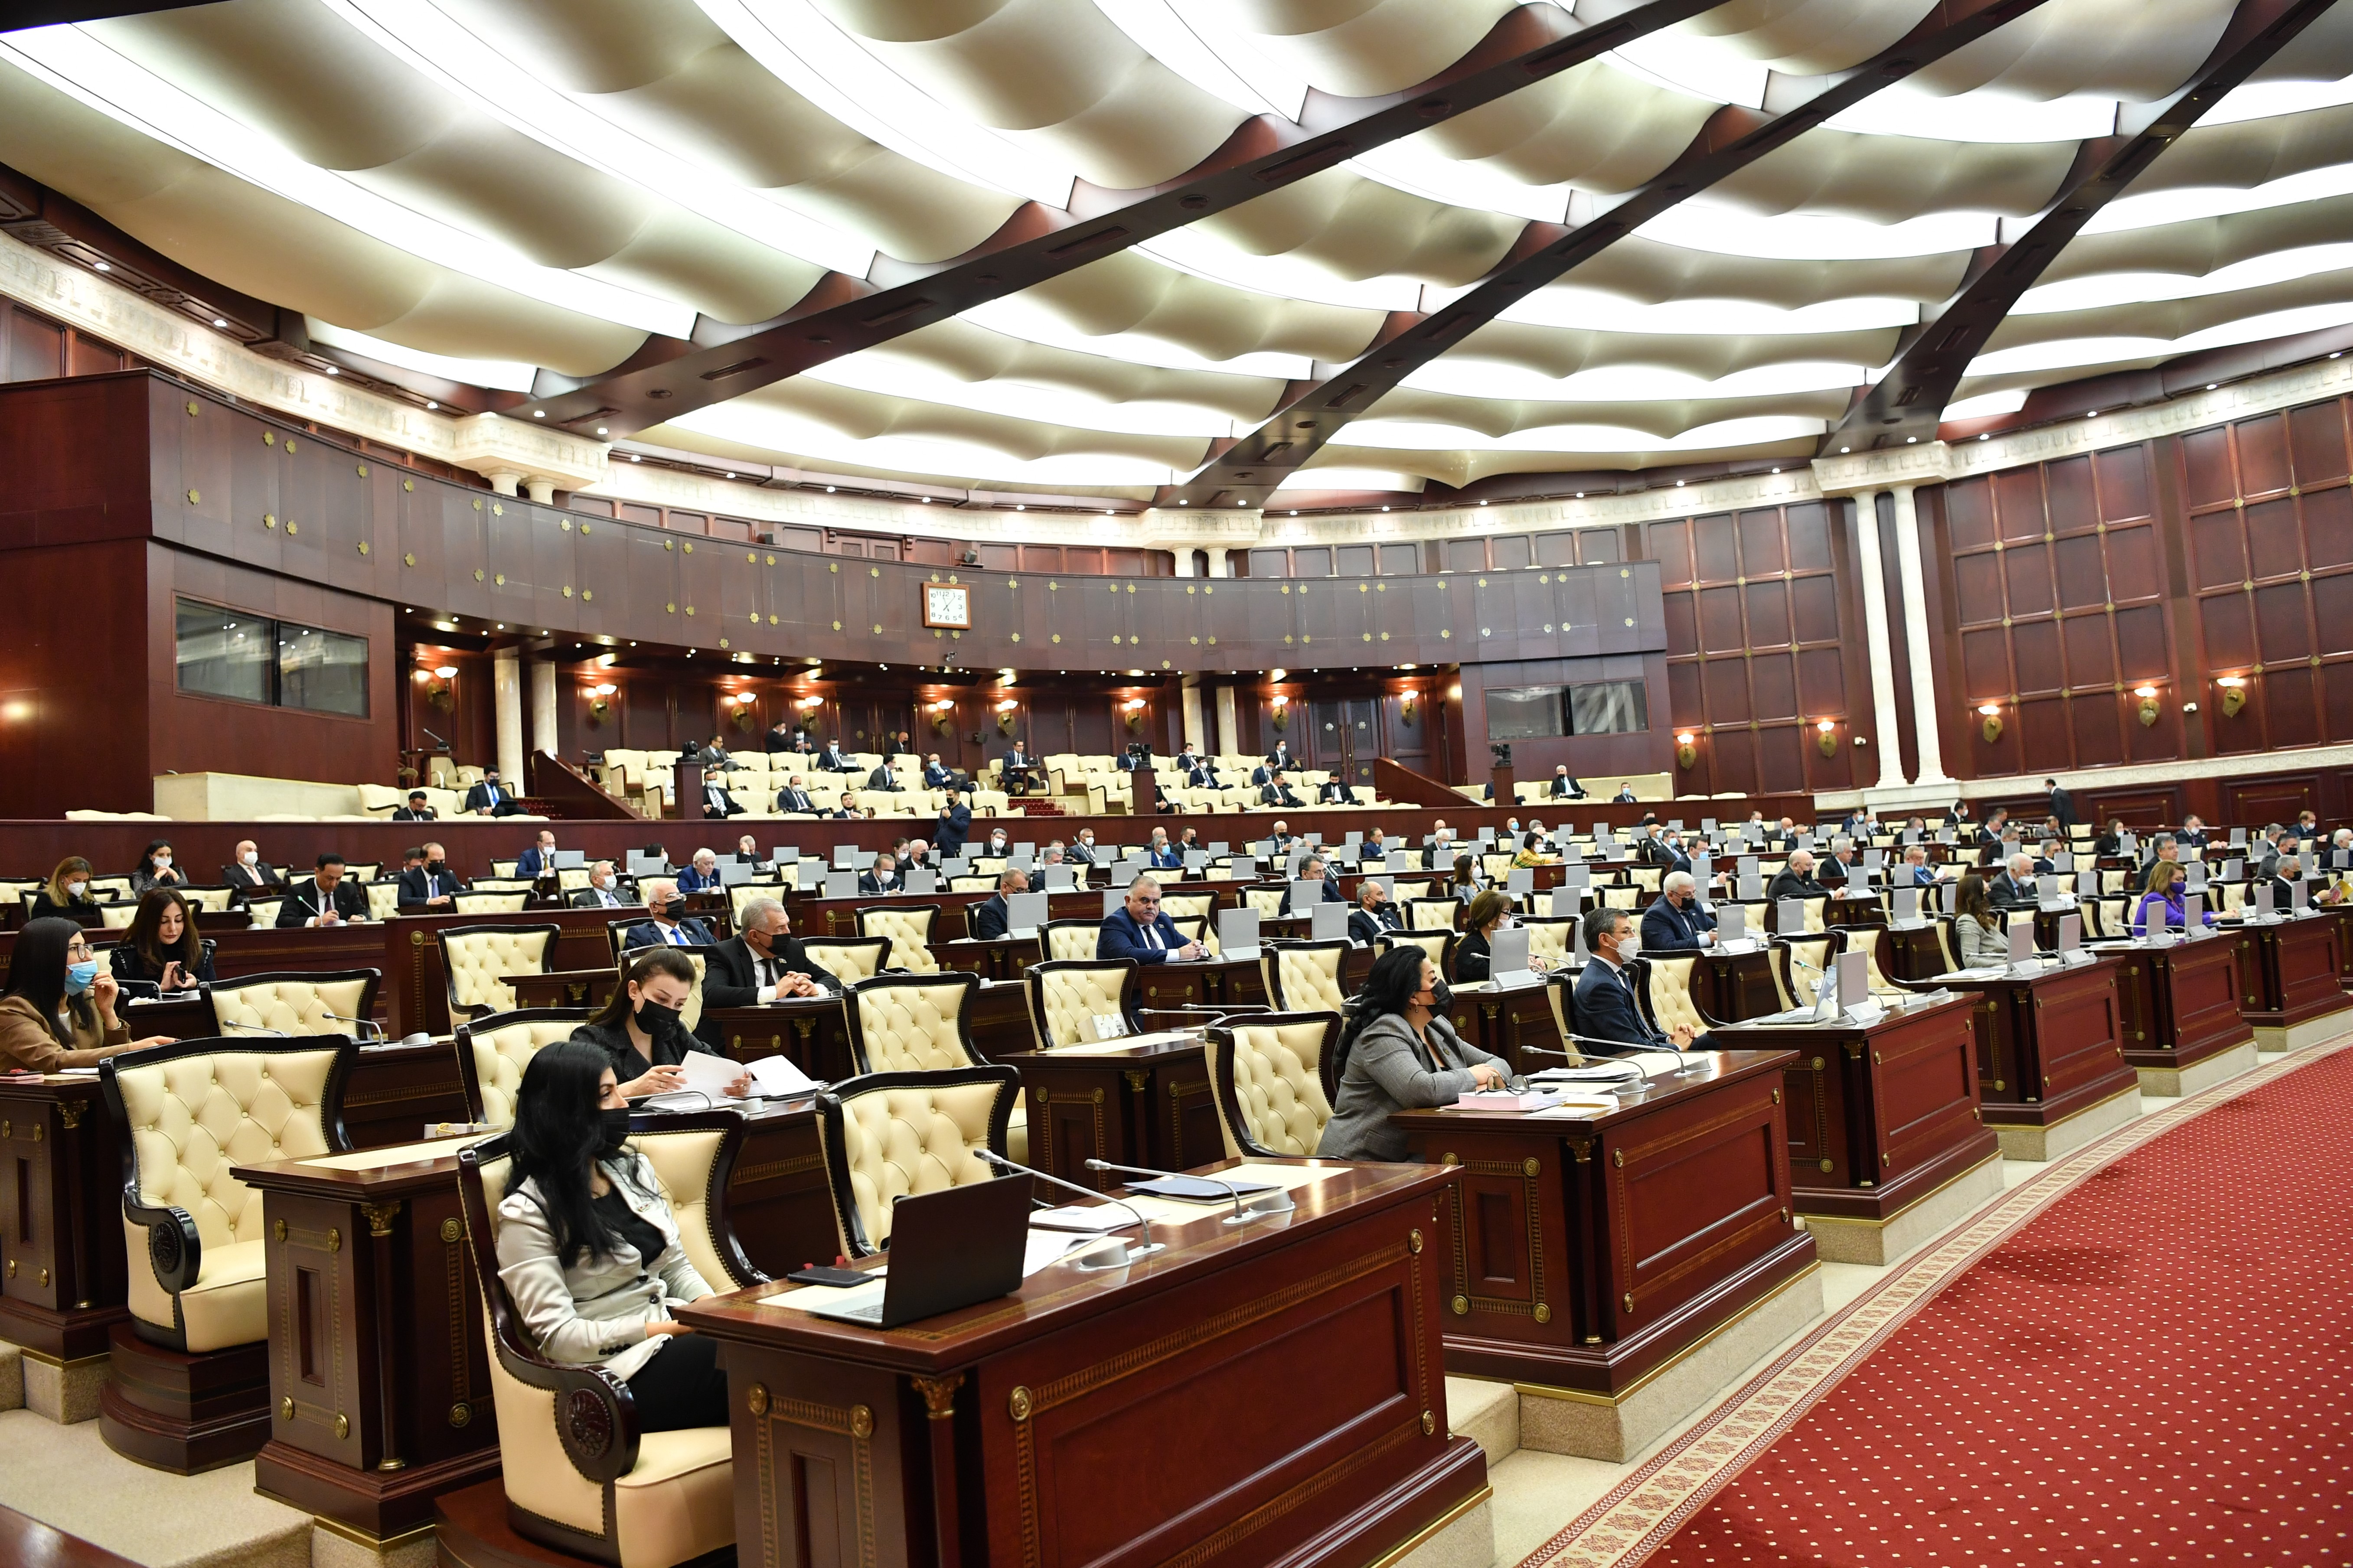 Milli Majlis Hears 2020 Gender Equality Maintenance Account